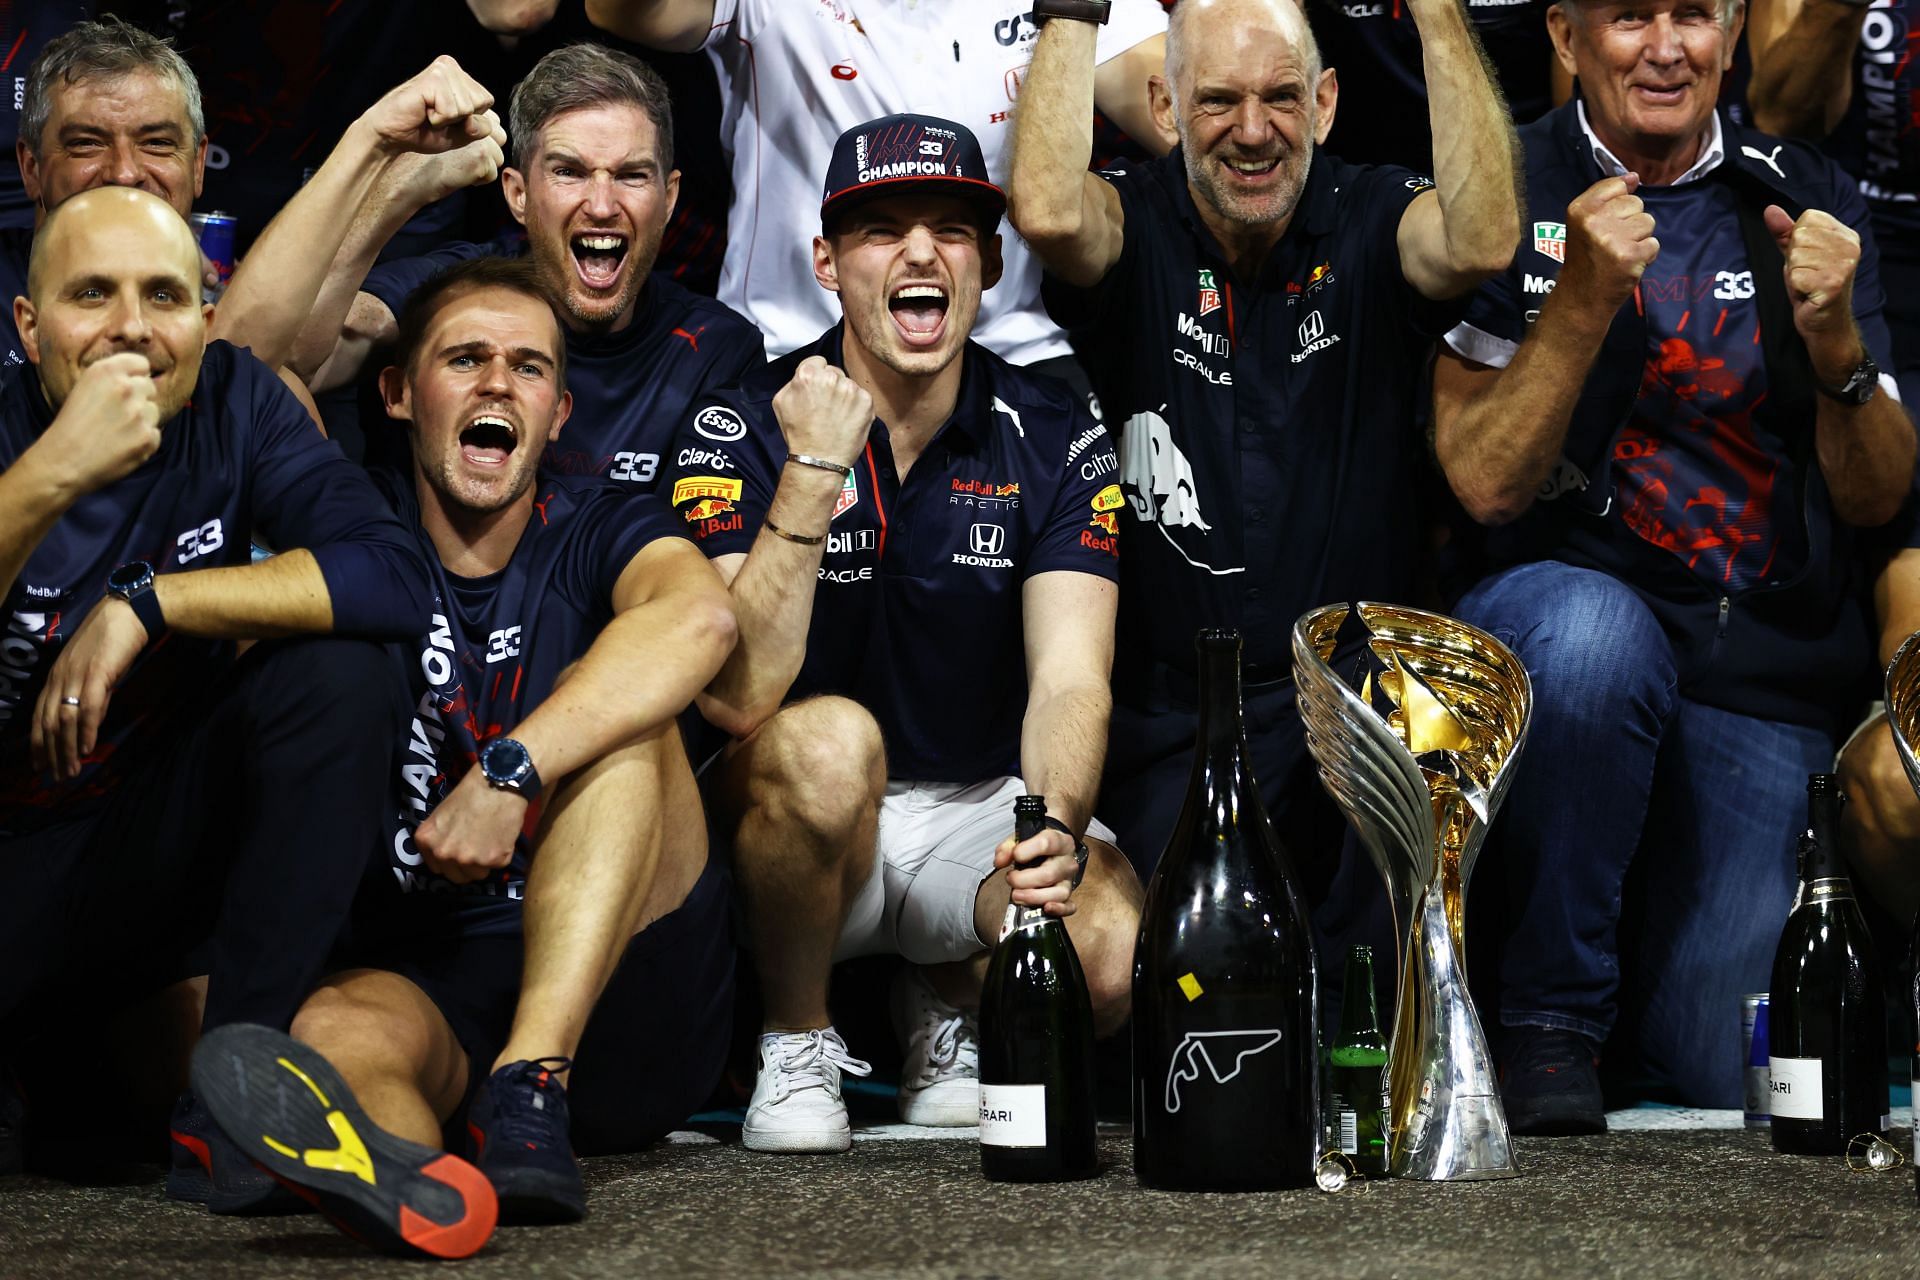 F1 Grand Prix of Abu Dhabi - Max Verstappen celebrates with his team.